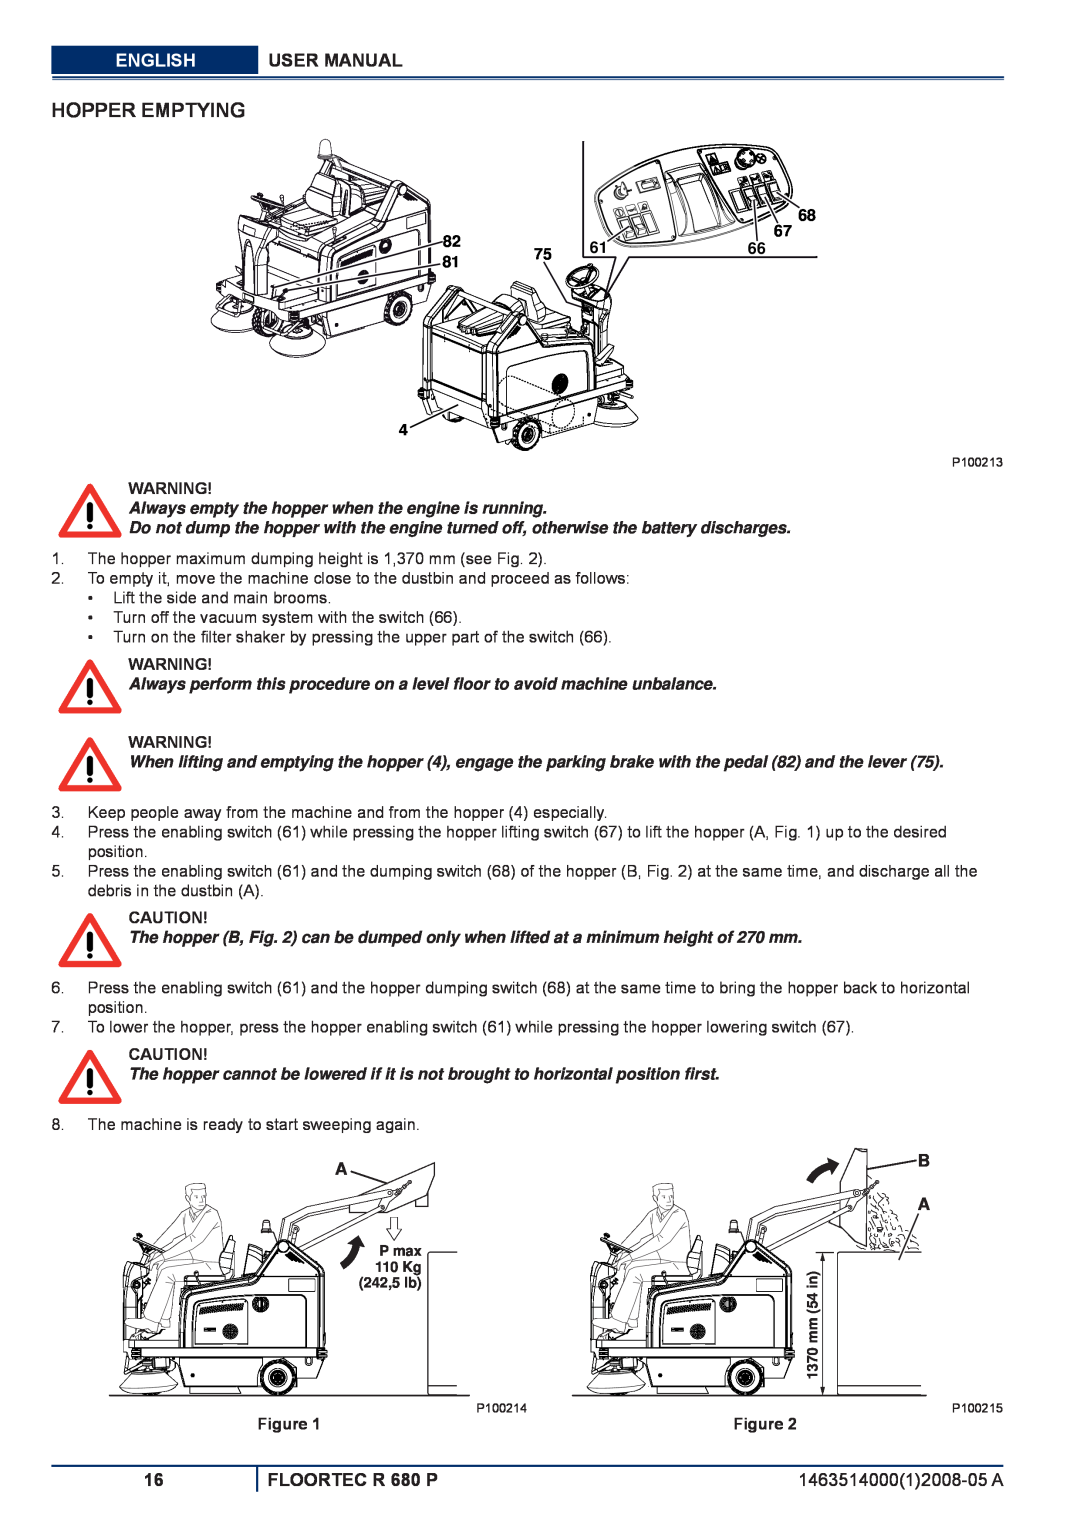 Nilfisk-ALTO manuel dutilisation Hopper Emptying, English, User Manual, FLOORTEC R 680 P, Figure 